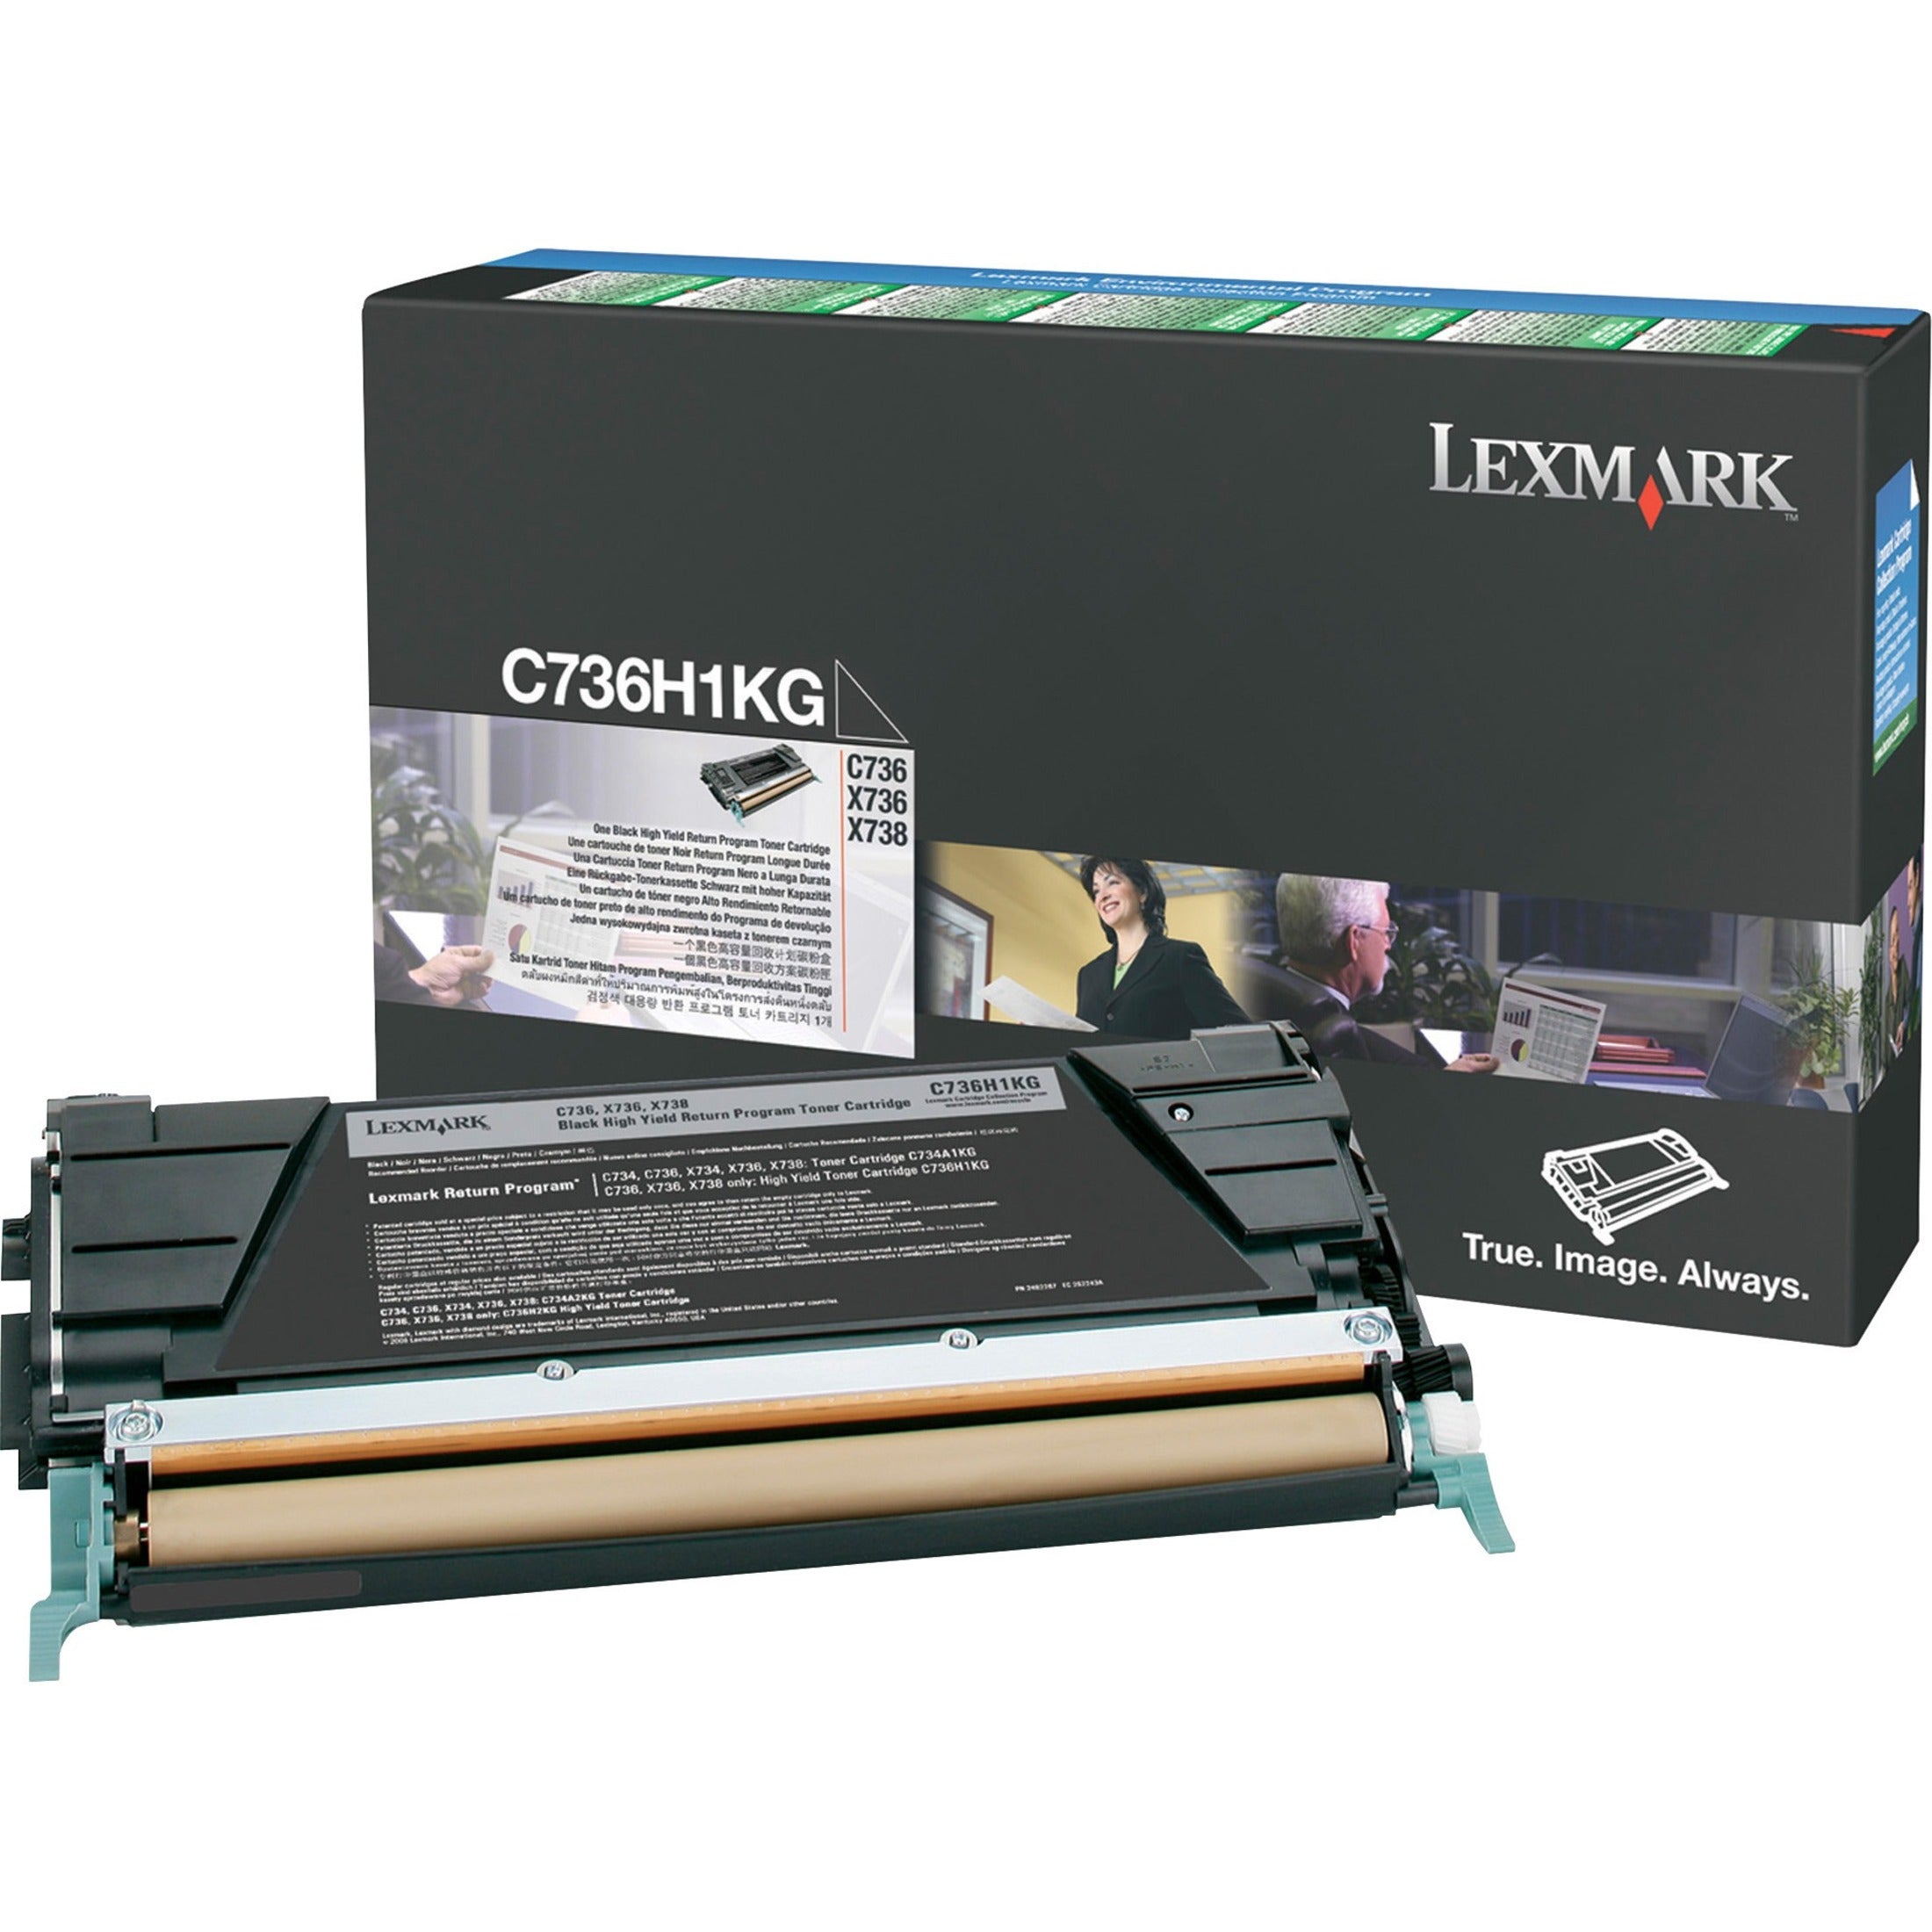 Lexmark C736H1KG Toner Cartridge, 12000 Page Yield, Black